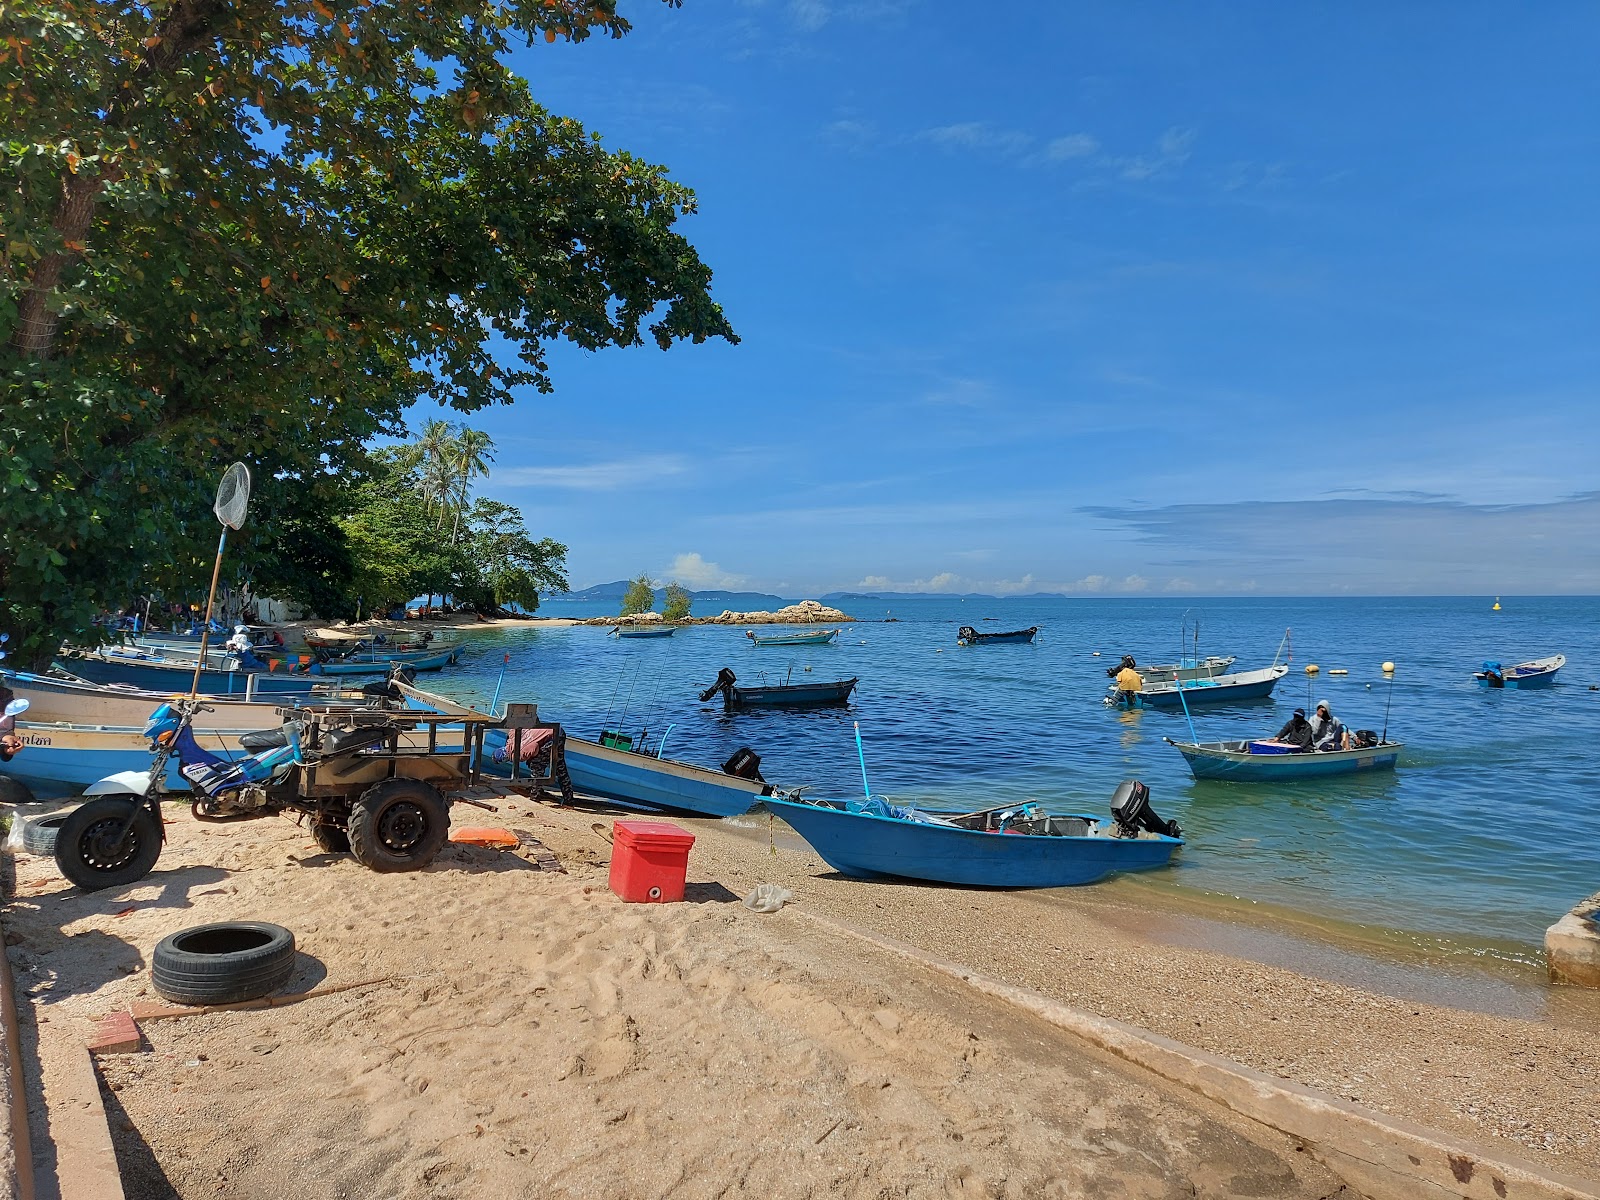 Foto de Wongamat beach - lugar popular entre os apreciadores de relaxamento